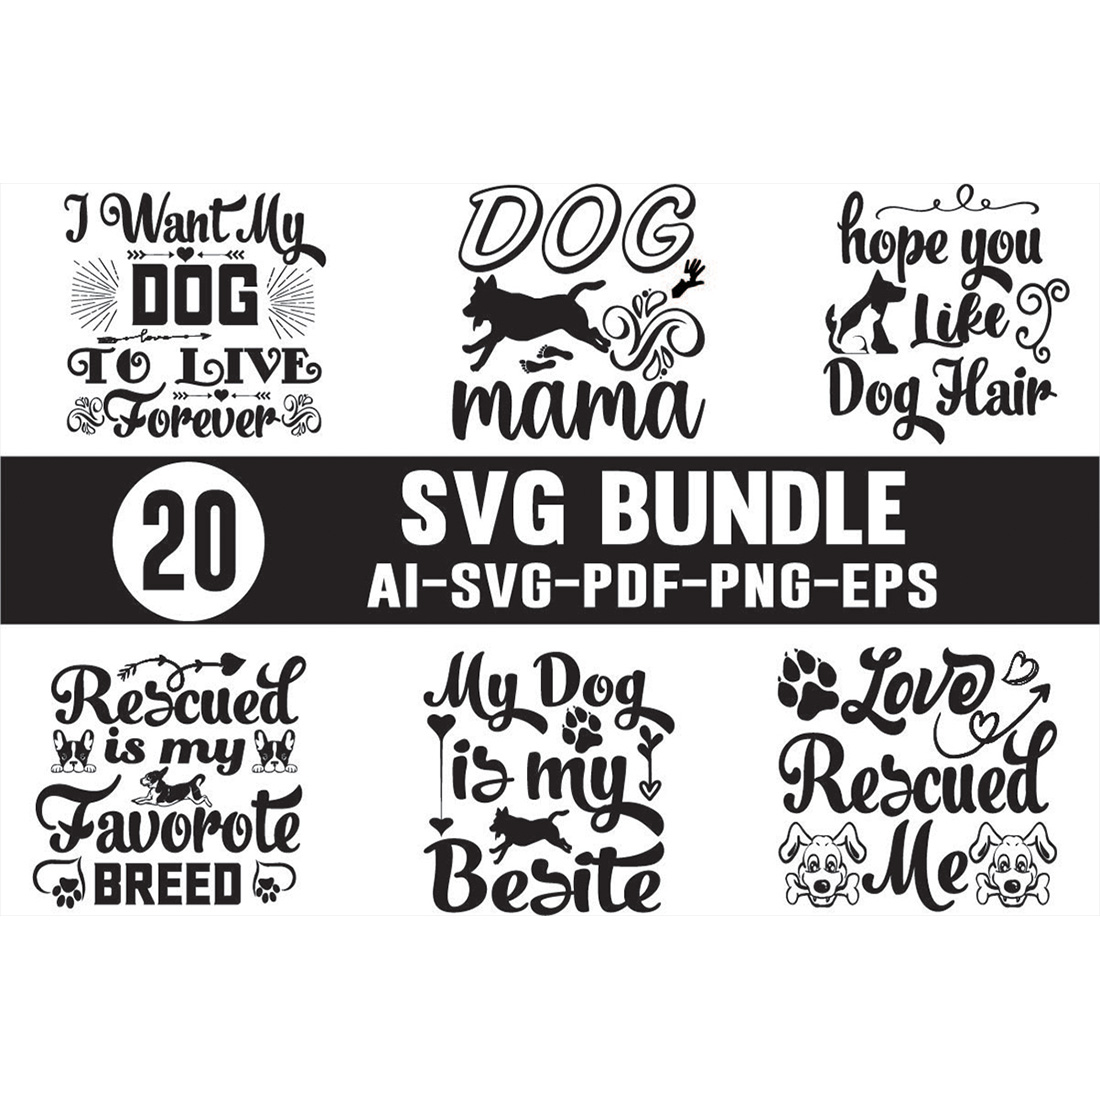 The svg bundle includes 20 svg font styles.